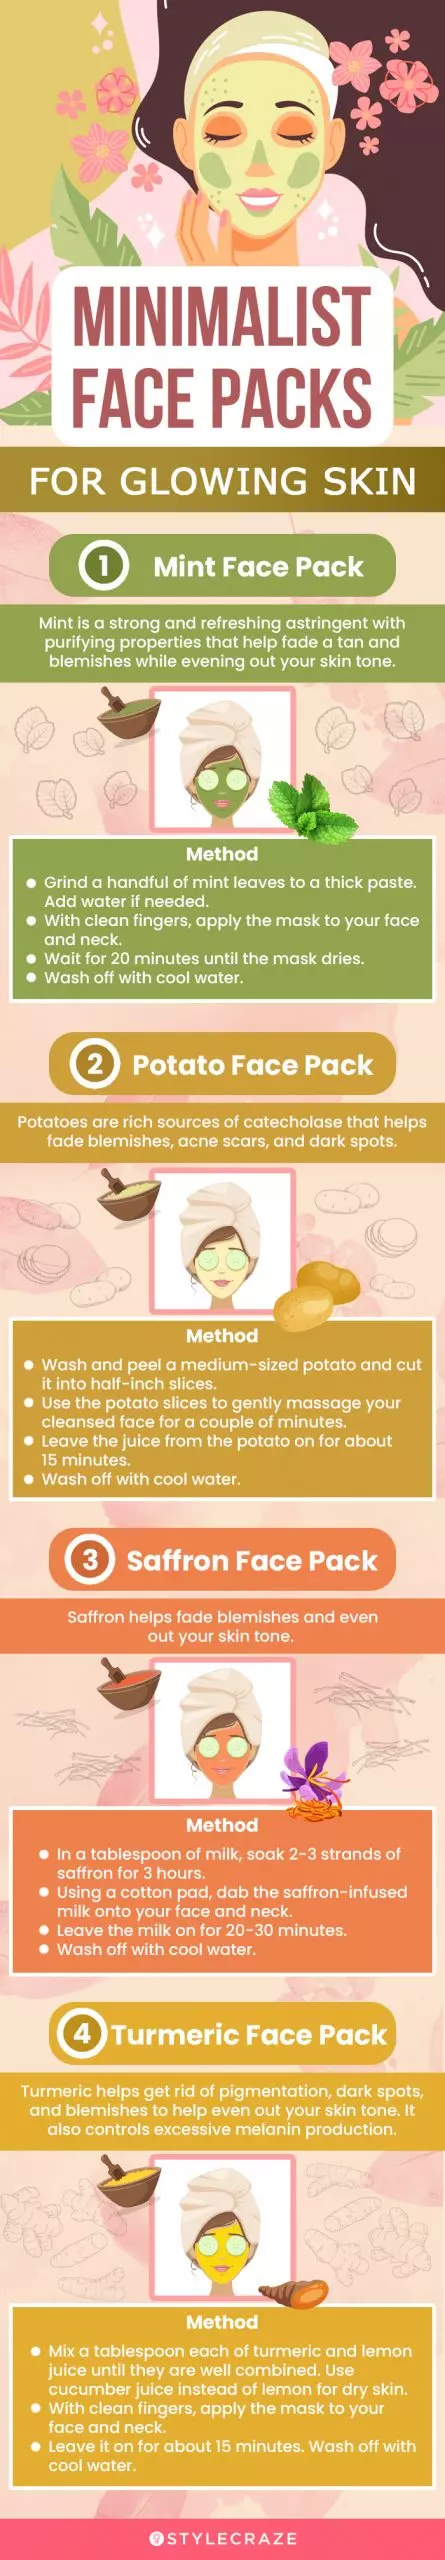 minimalist face packs for lightened skin (infographic)